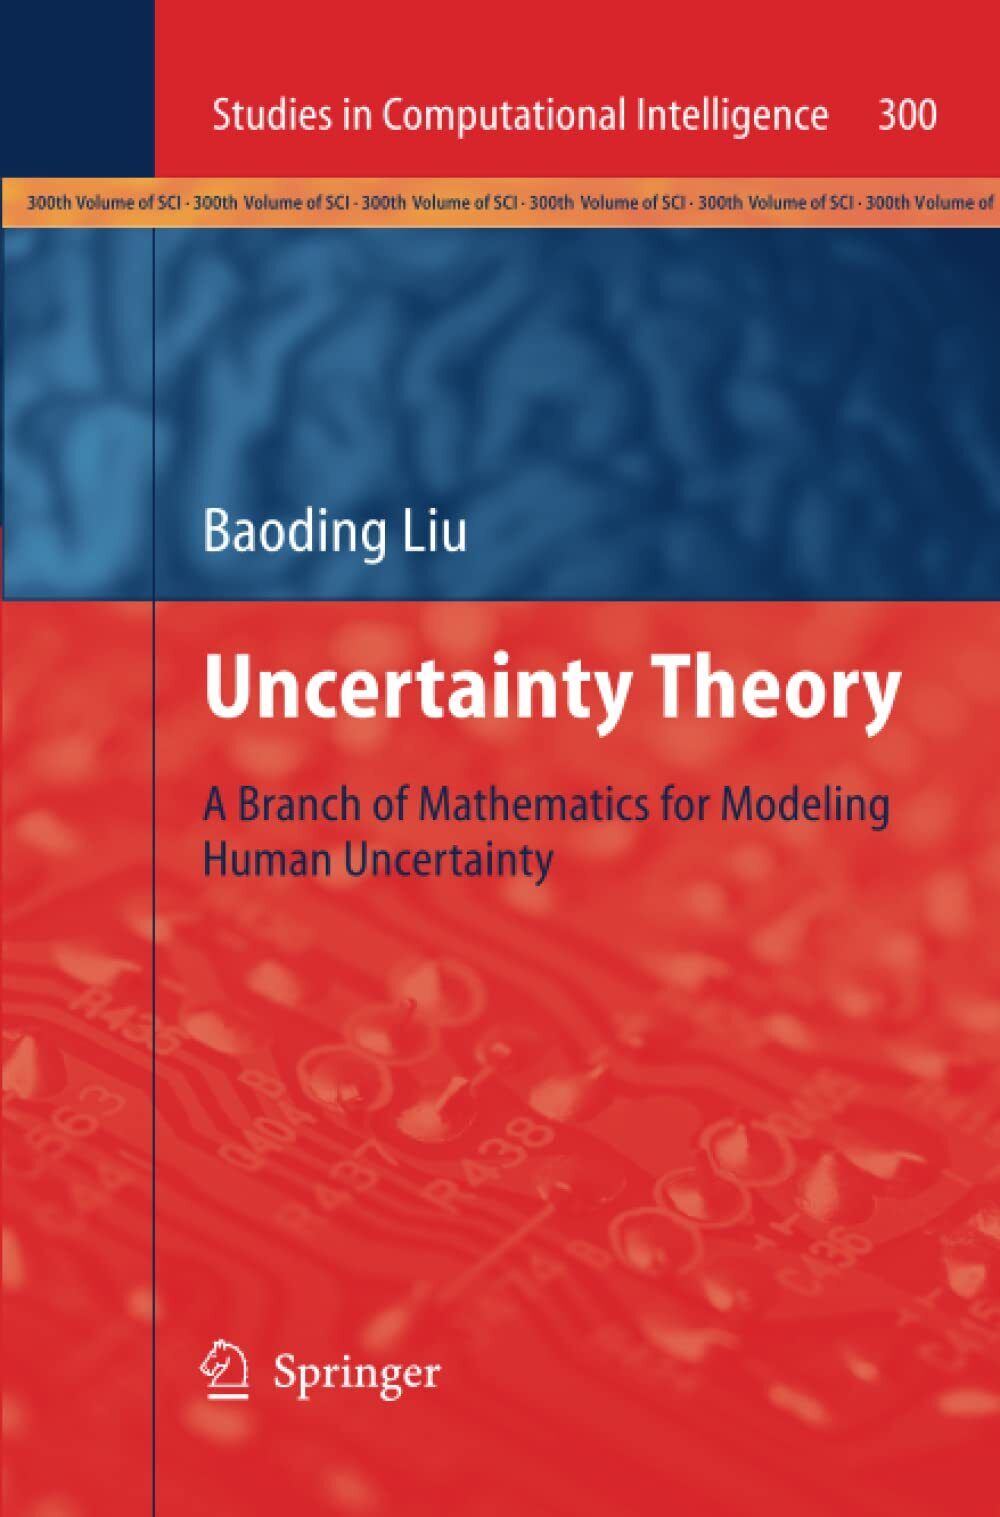 Uncertainty Theory - Baoding Liu - Springer, 2014